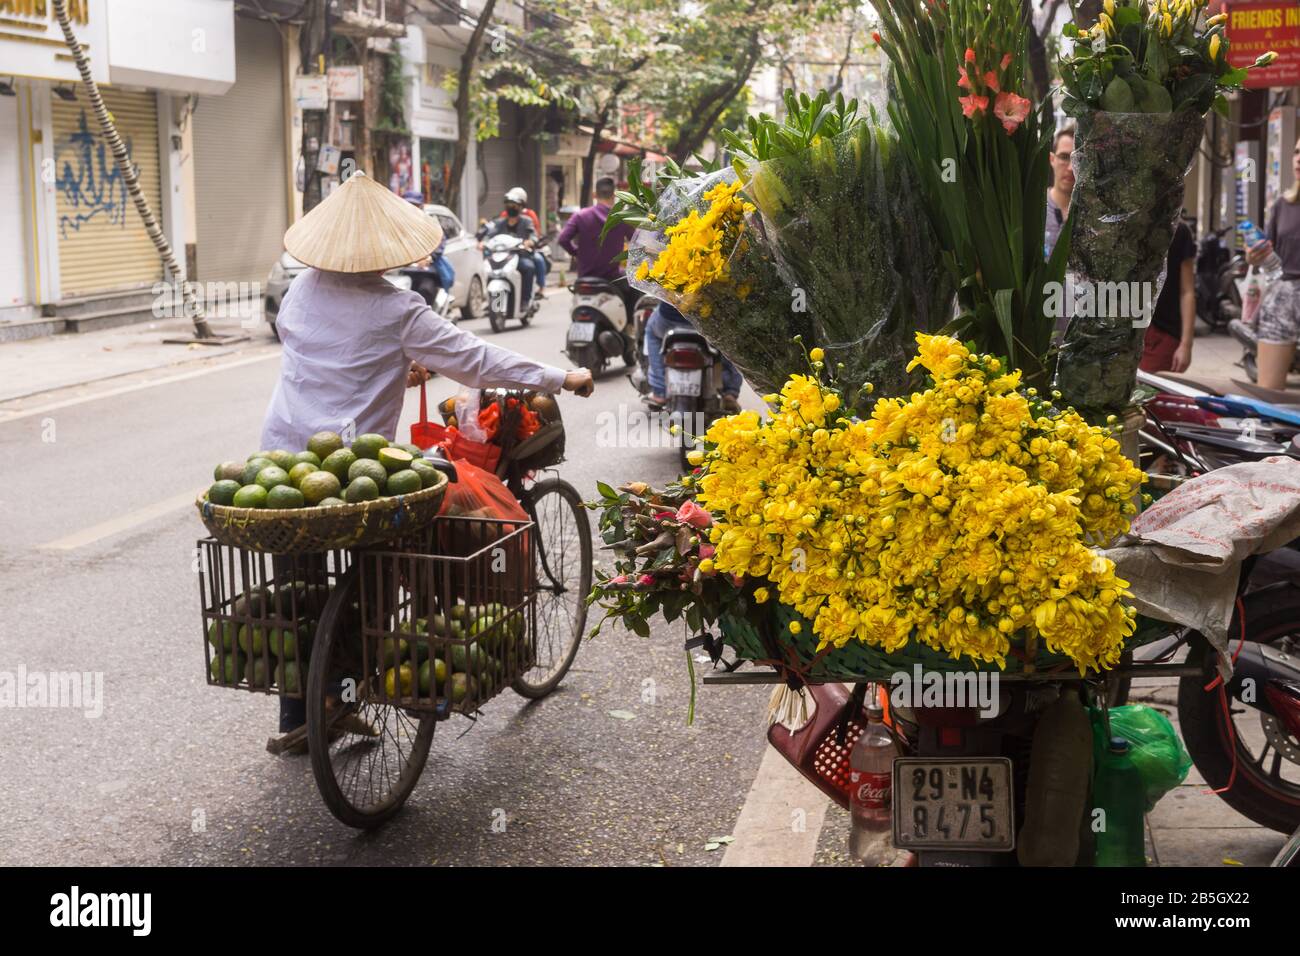 Hanoi street vendor - A street scene in the Old Quarter in Hanoi, fruit street vendor pushing the bicycle. Vietnam, Southeast Asia. Stock Photo